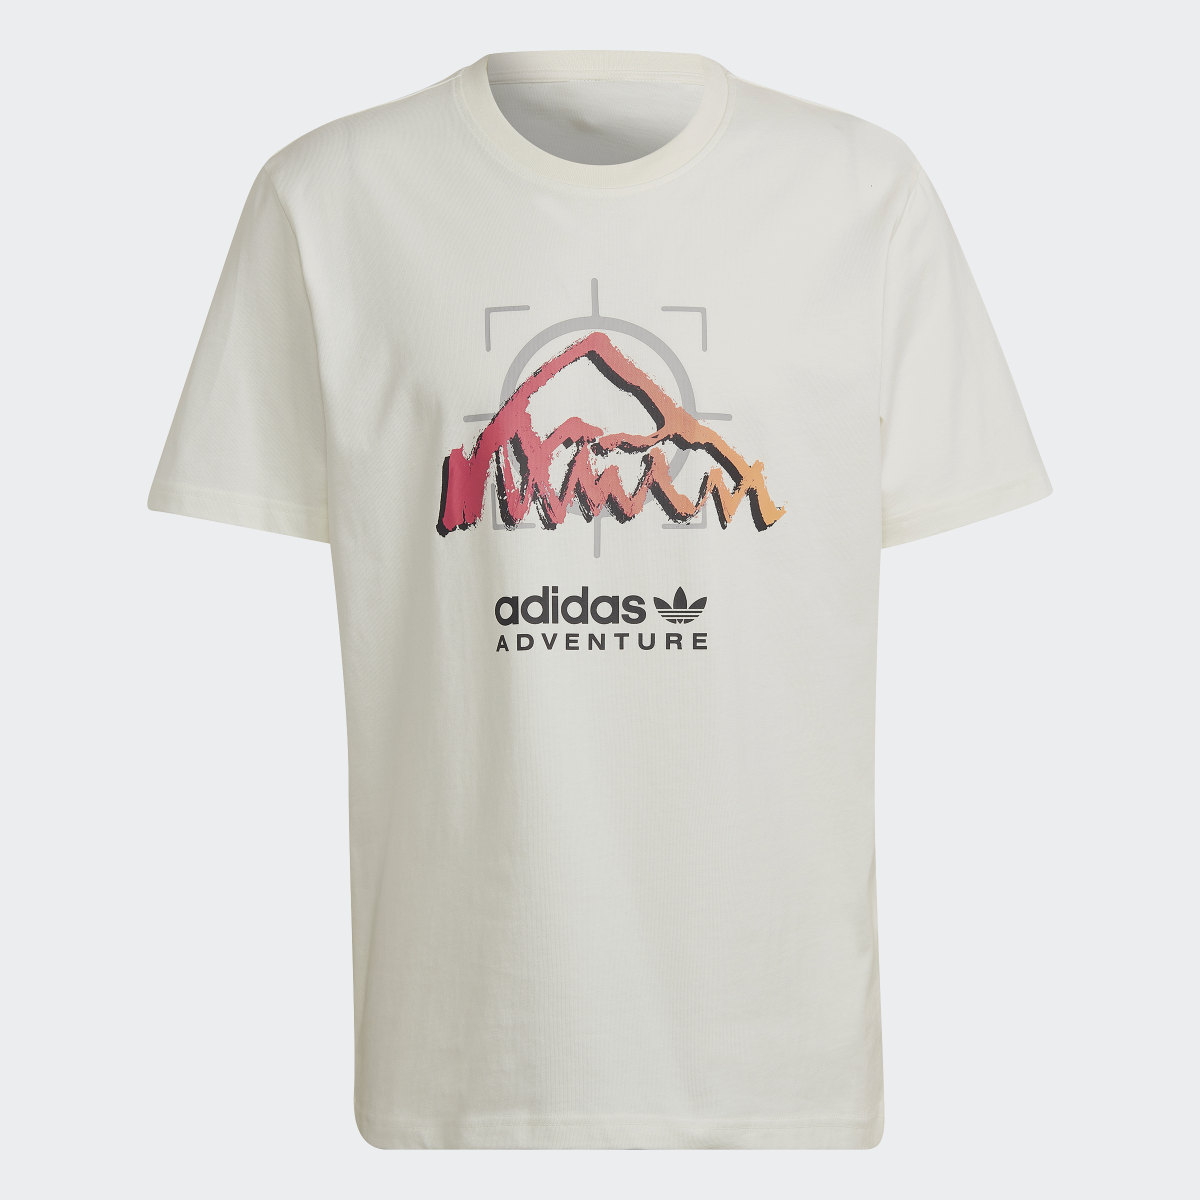 Adidas Adventure Ride T-Shirt. 5